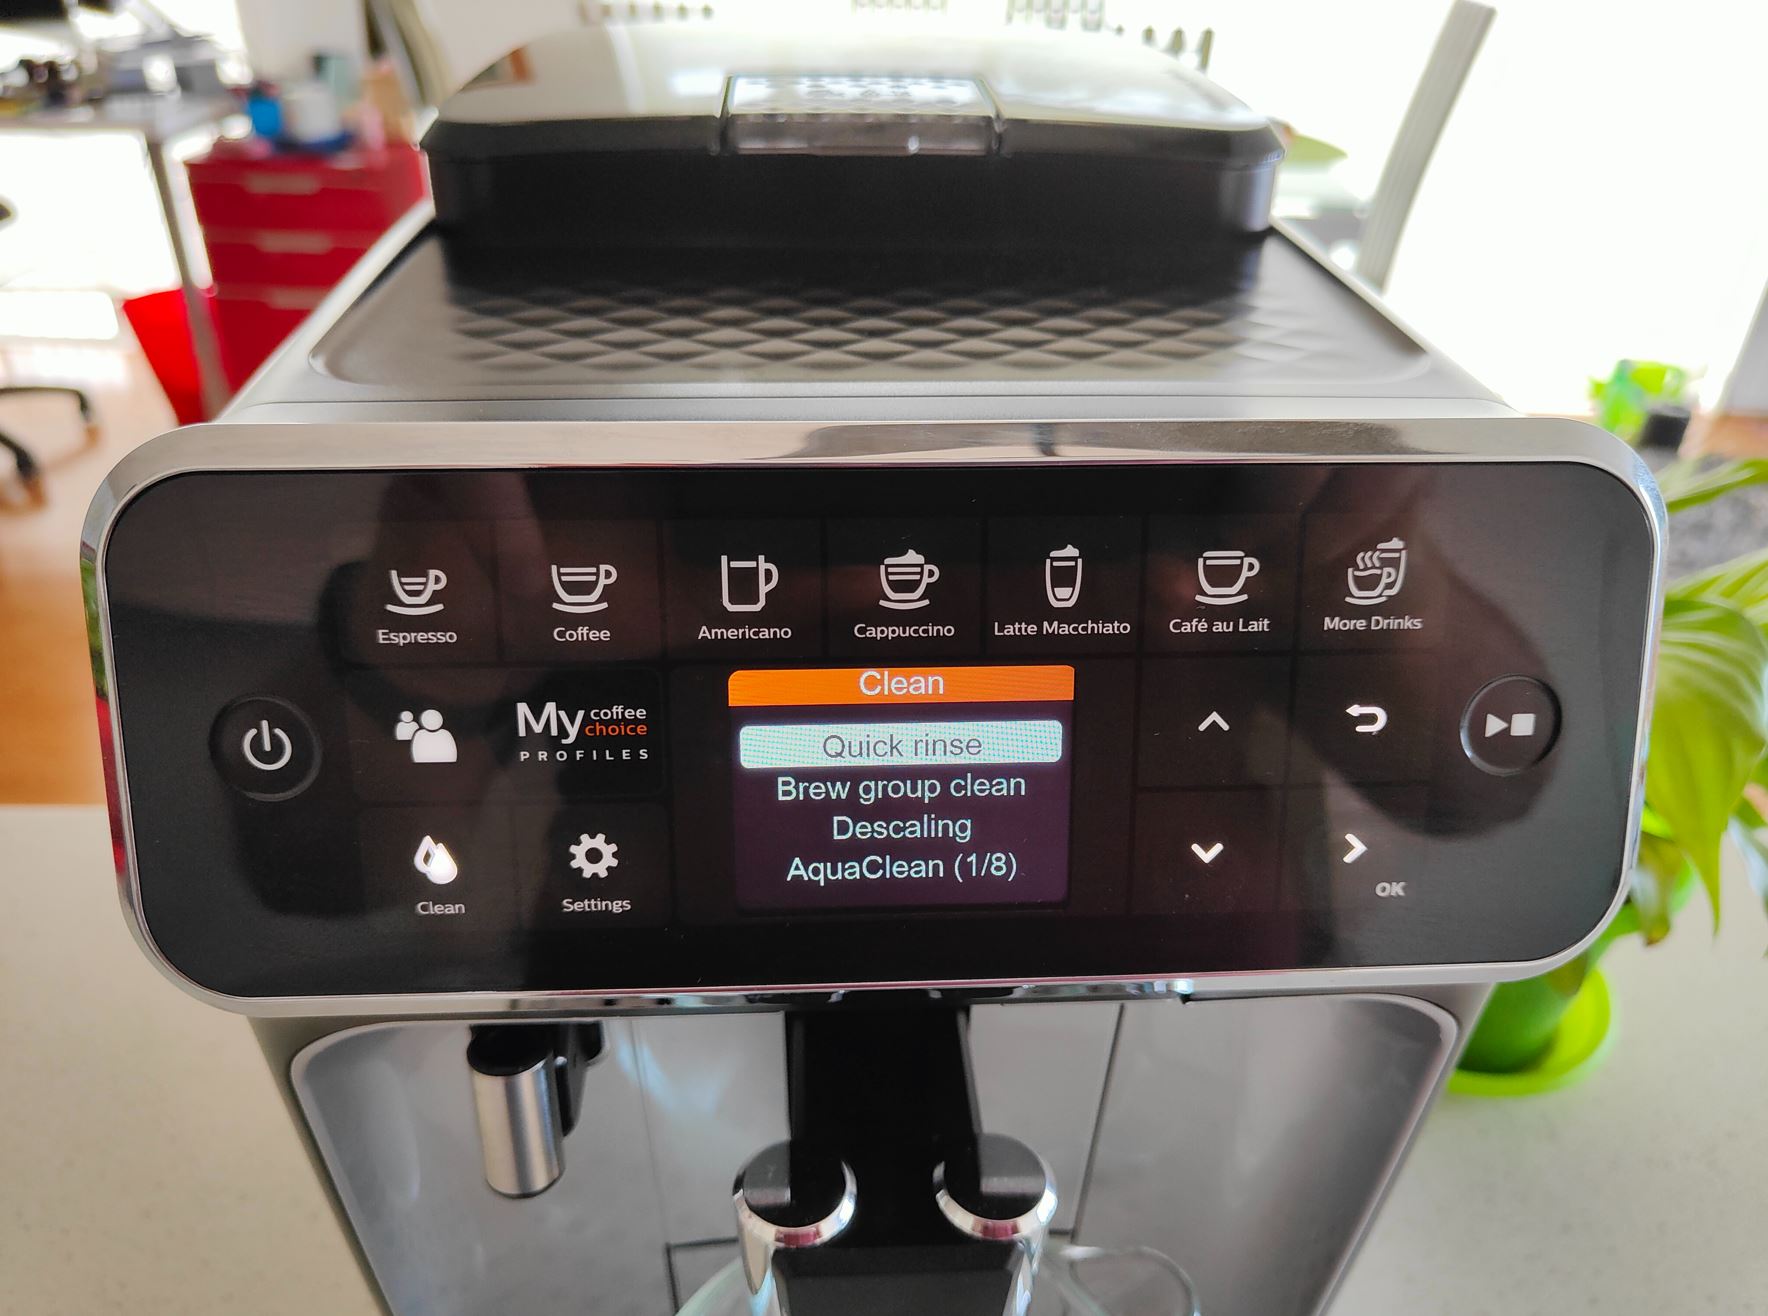 Review: Philips 4300 automatic espresso machine